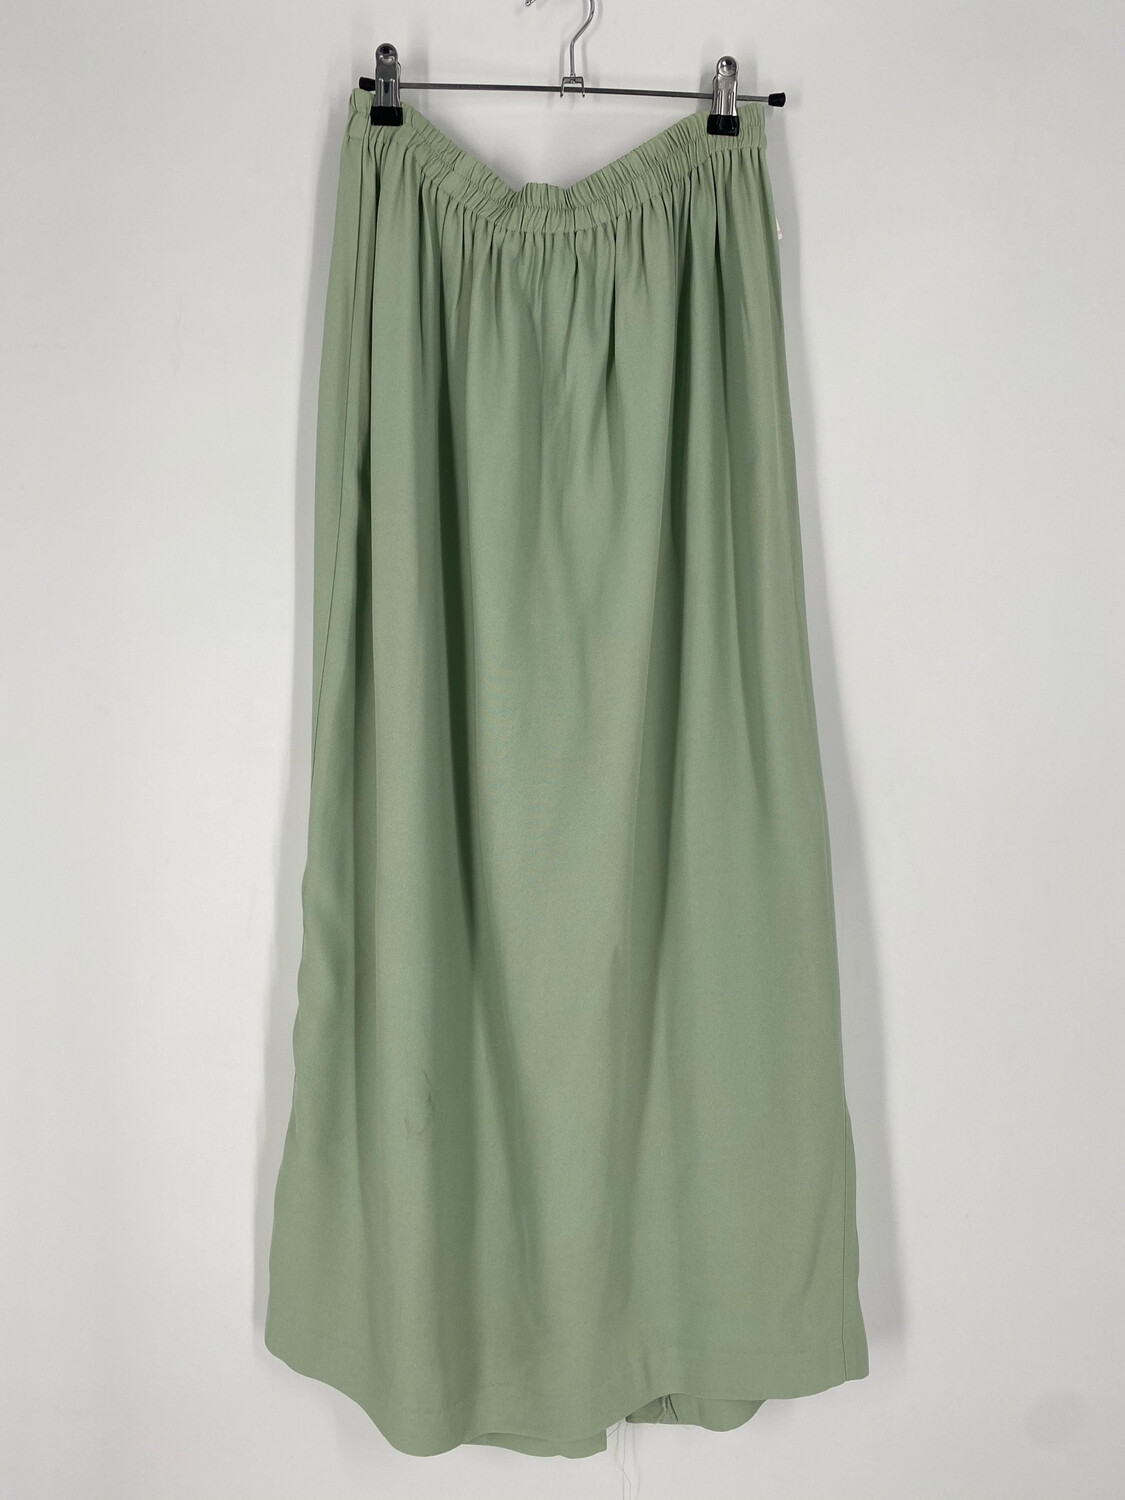 R&M Richards Mint Green Skirt Size 16